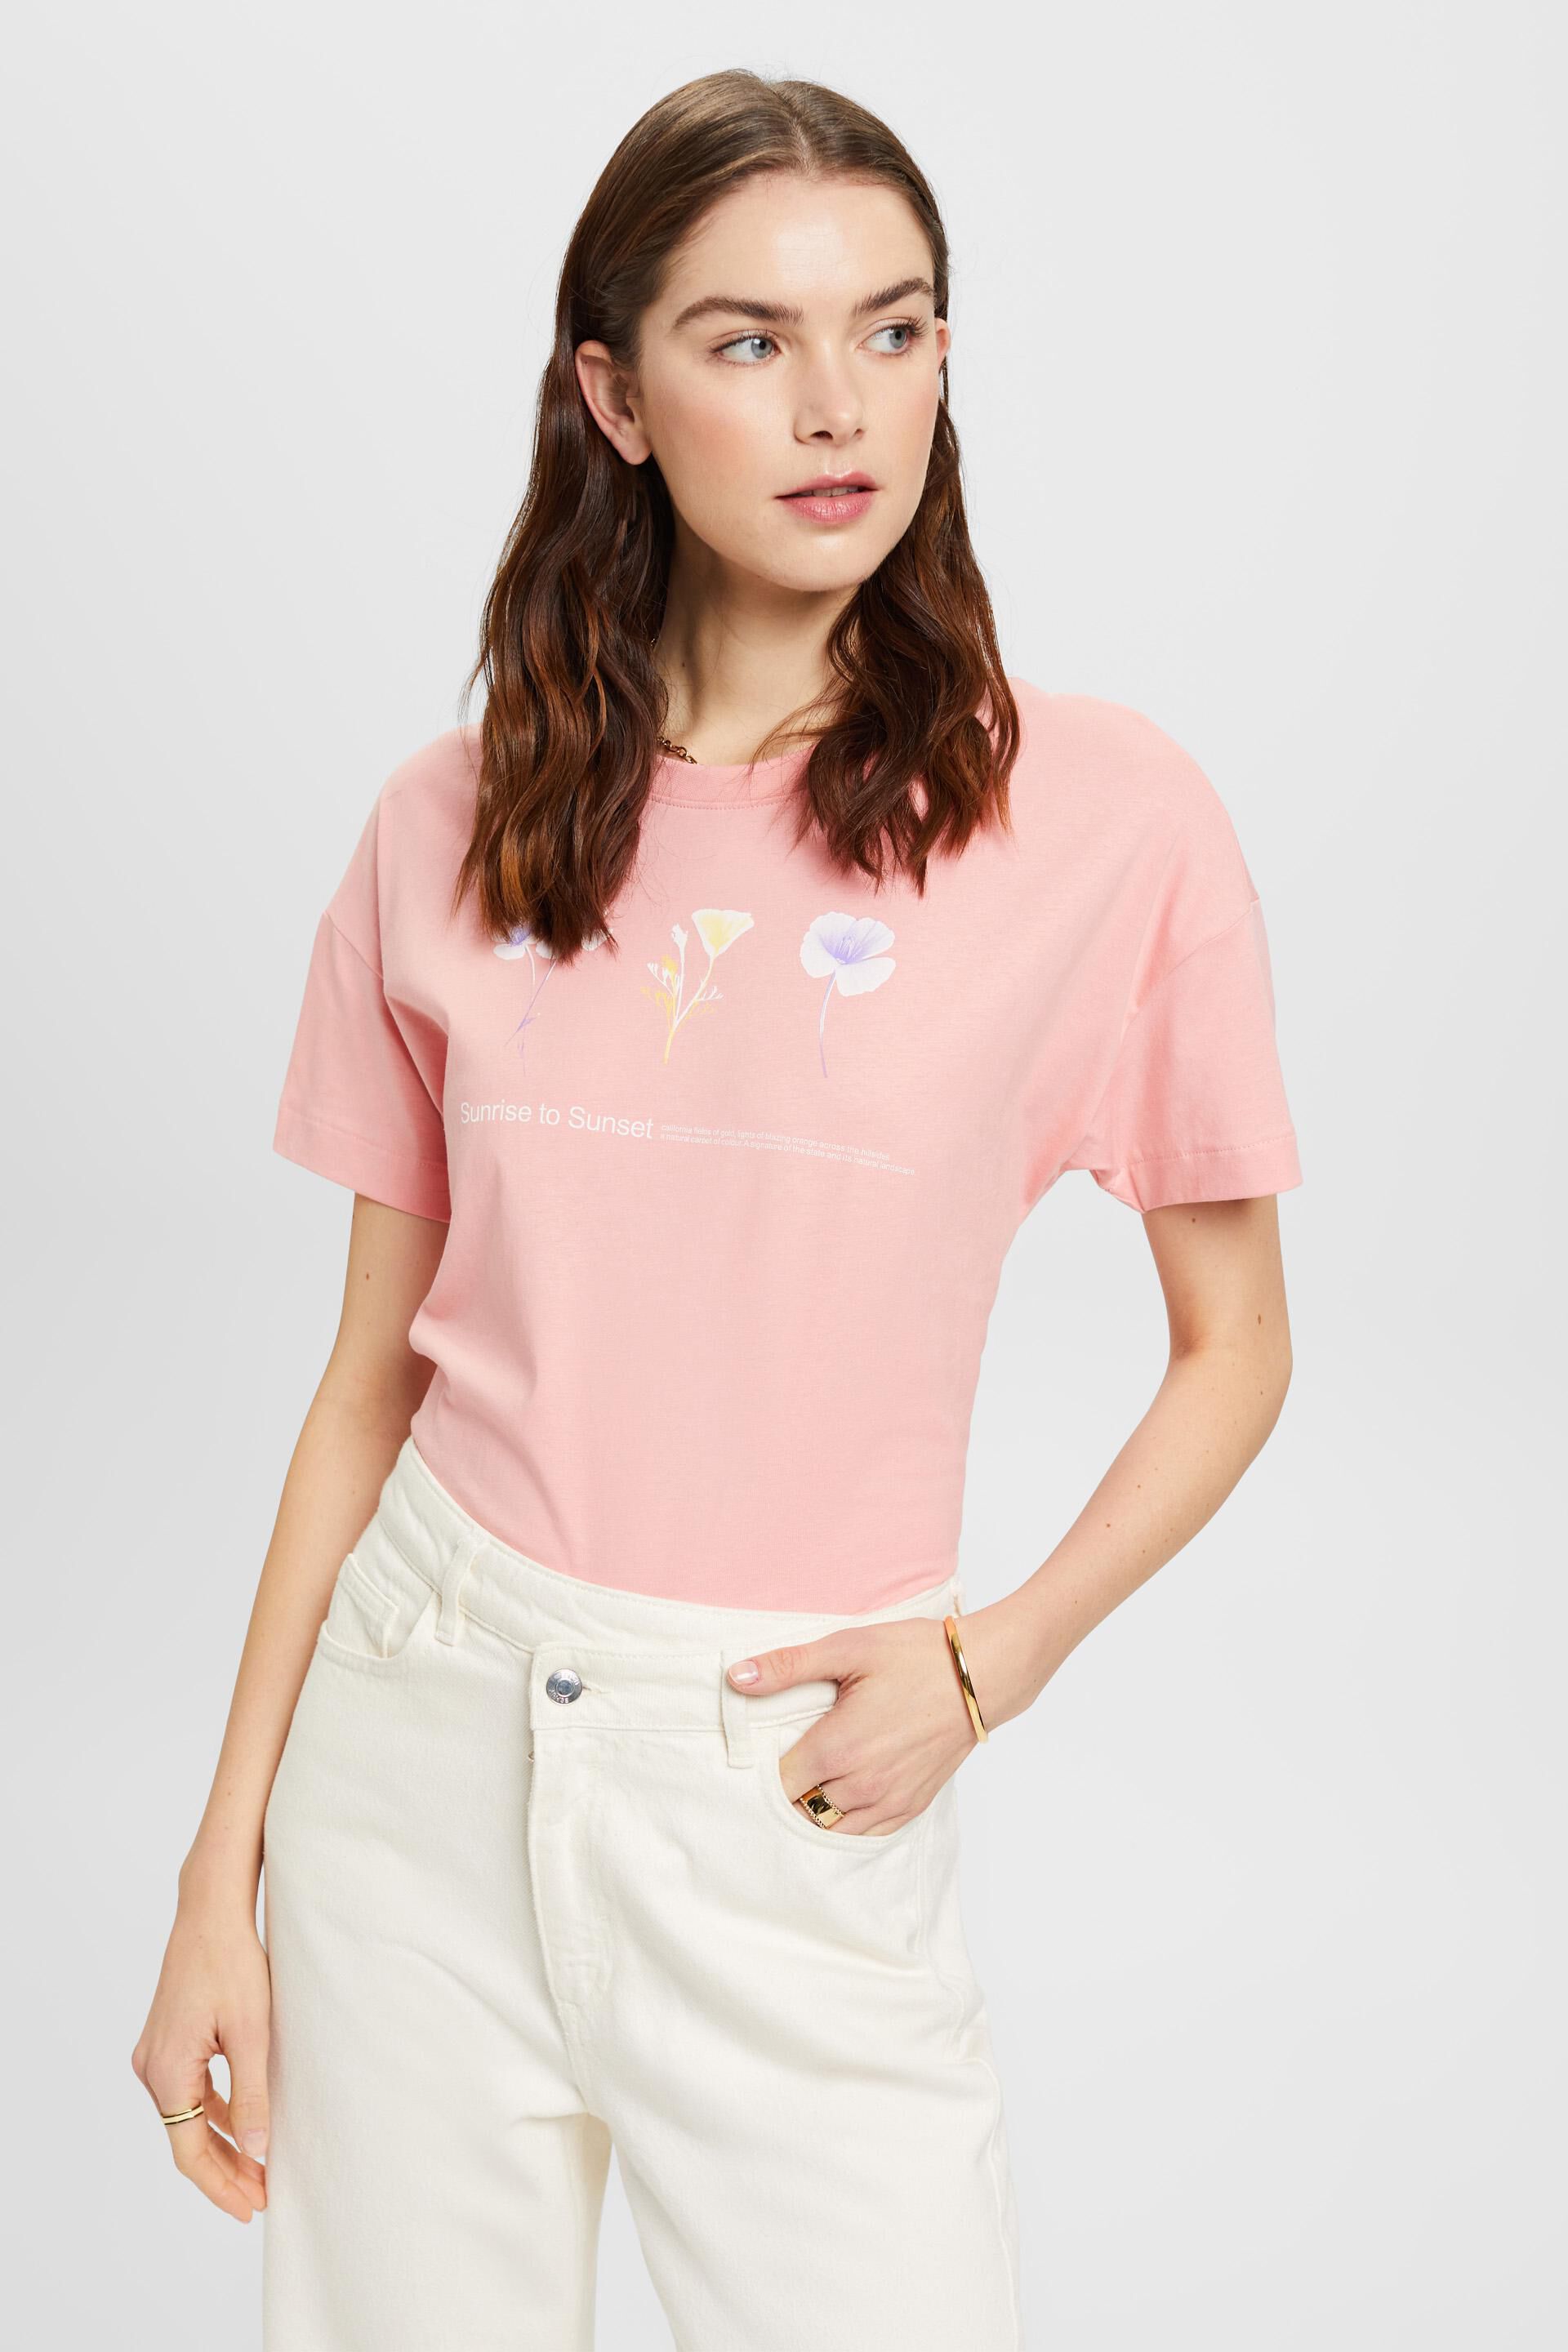 ESPRIT - T-shirt with floral chest print at our online shop